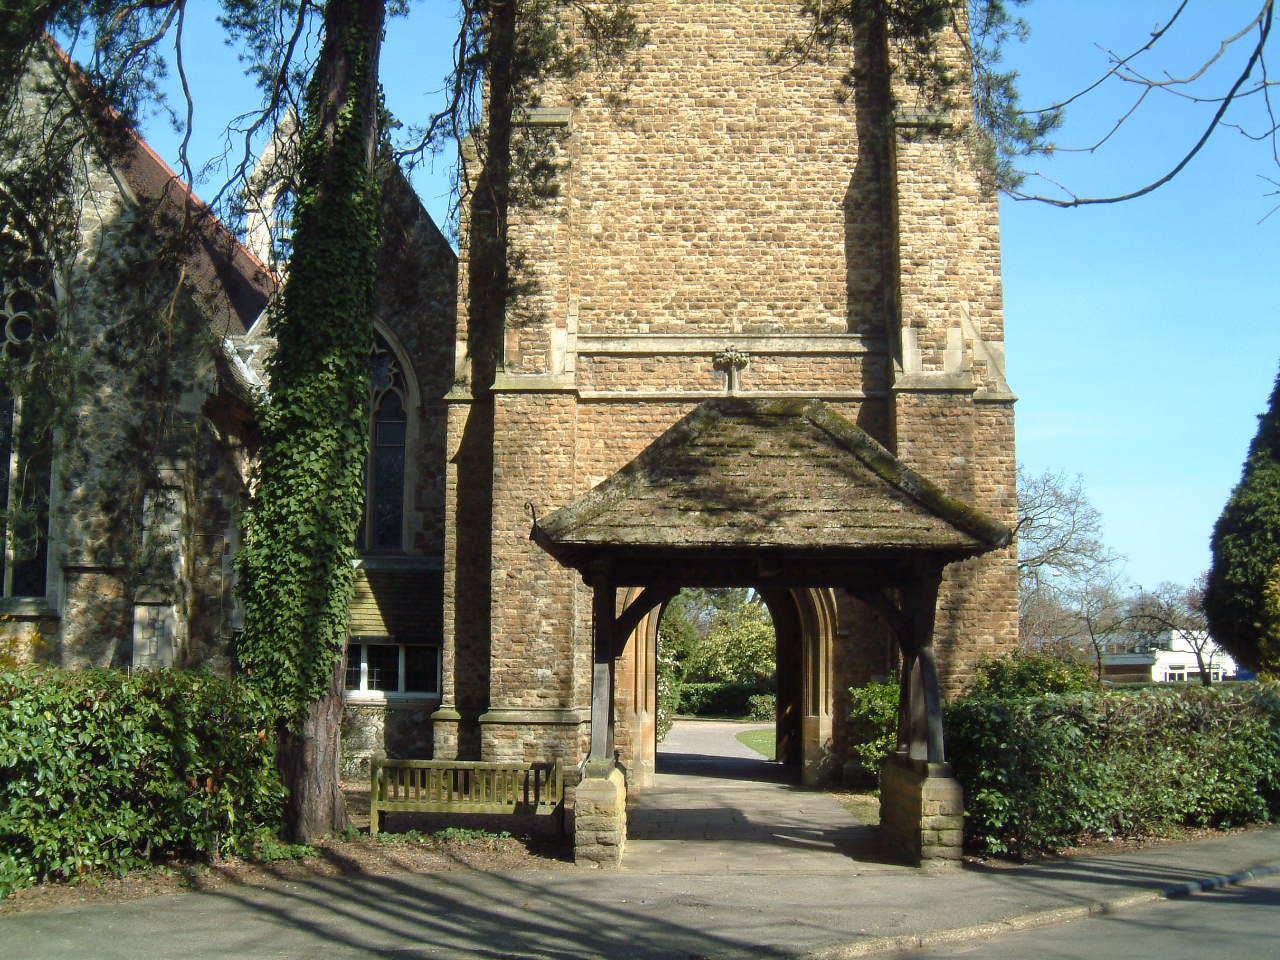 St Marys Church Oatlands Village - between Walton on Thames and Weybridge Surrey